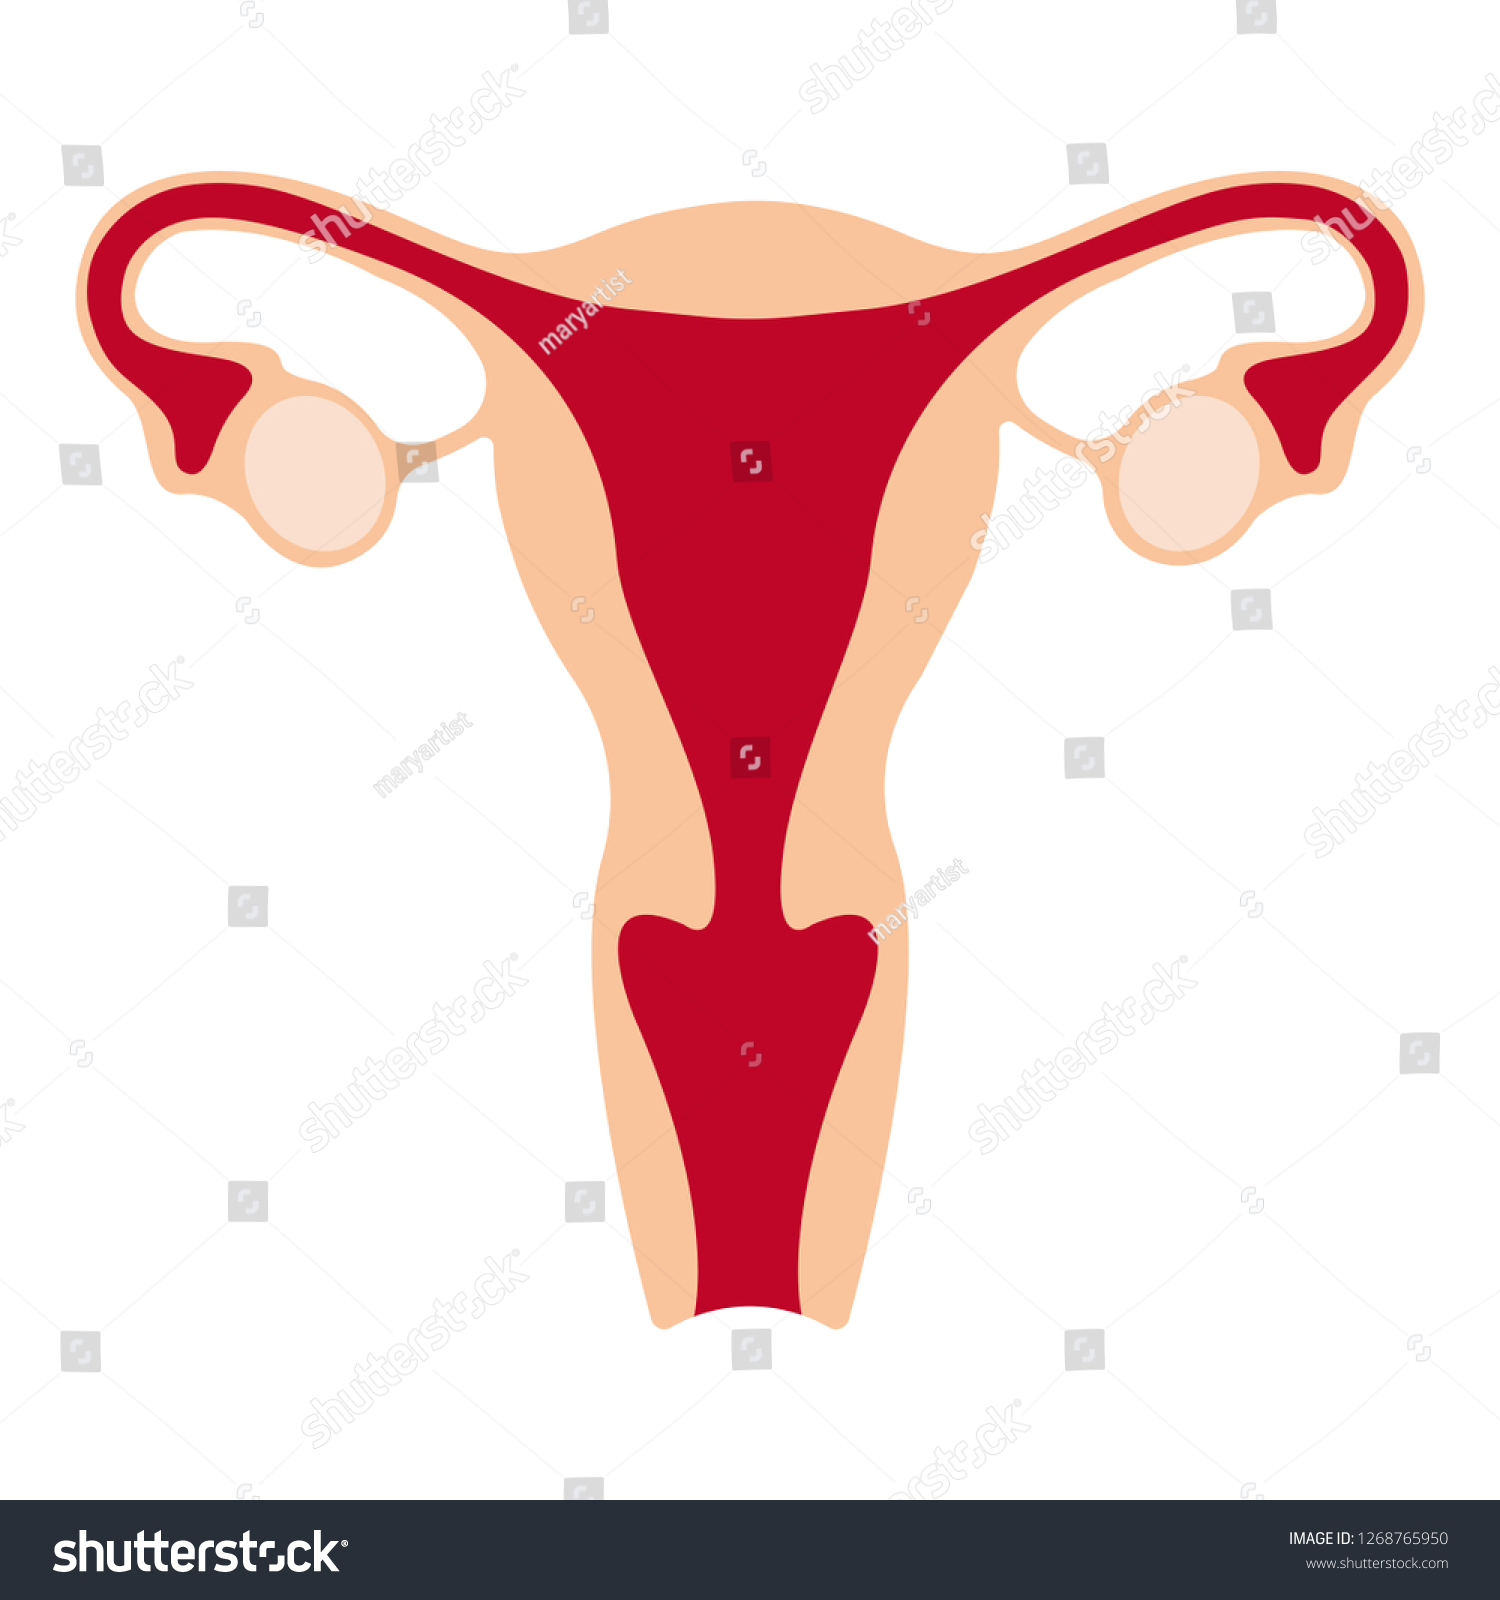 Human Anatomy Female Reproductive System Female Vector De Stock Libre De Regalías 1268765950 4607